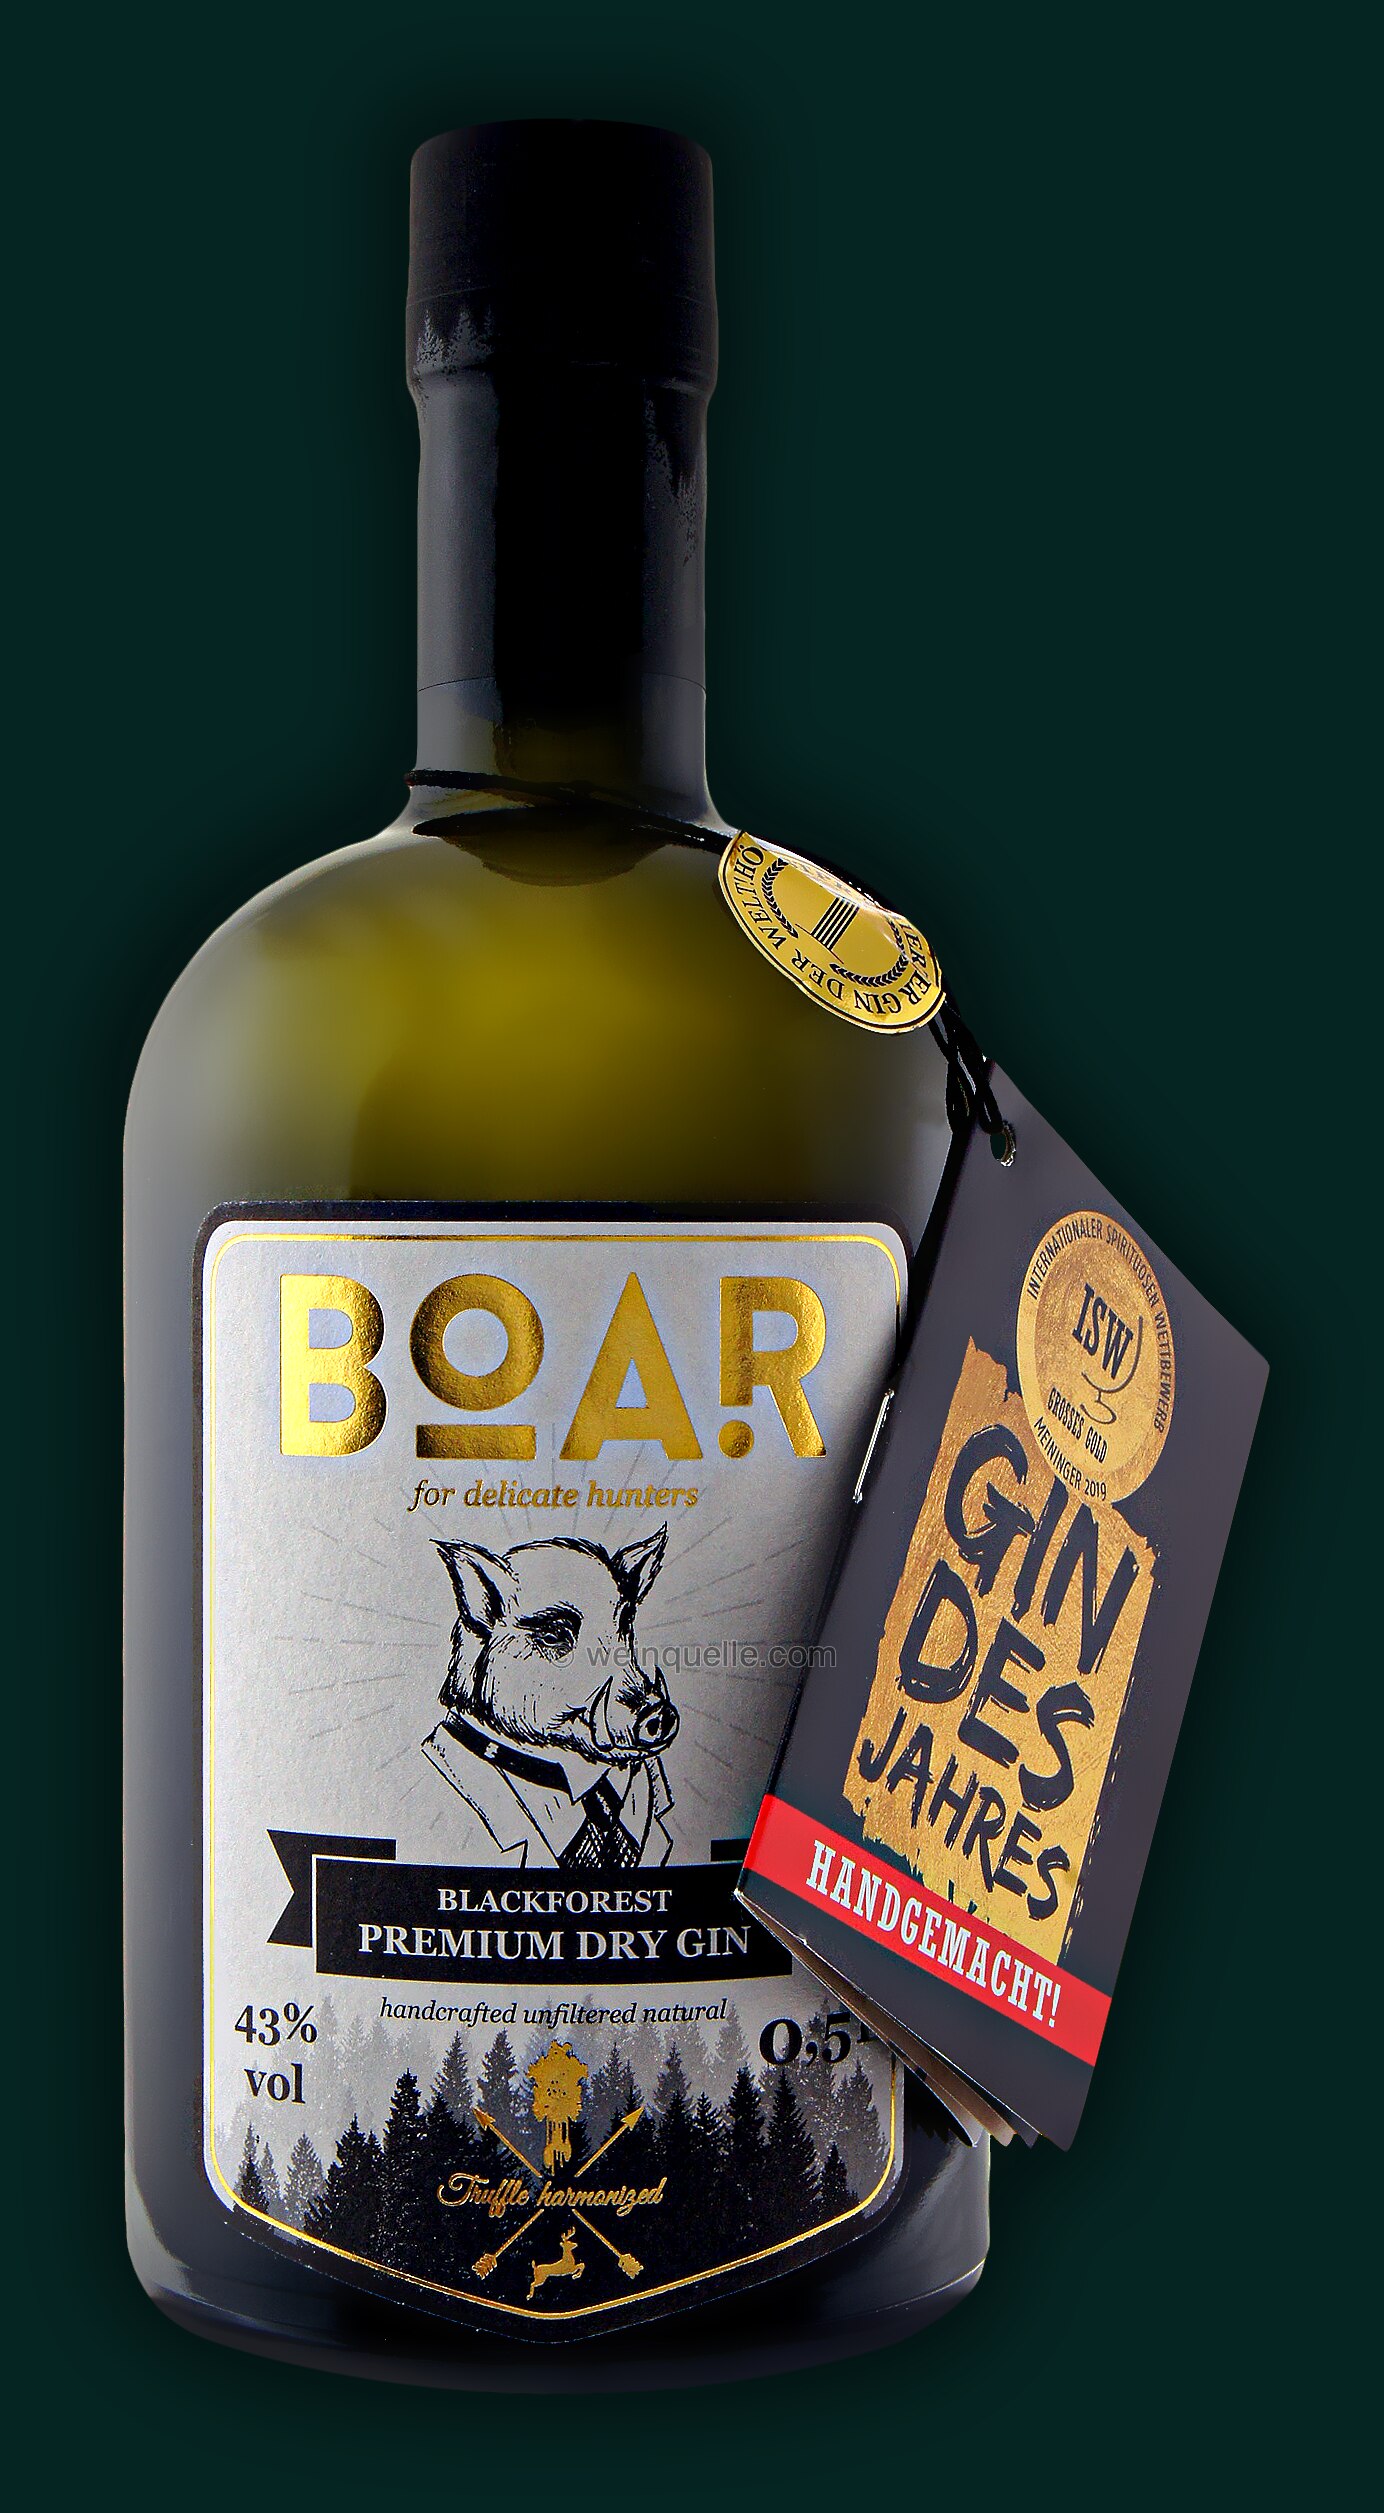 Boar Black Forest Premium Dry Gin 43%, 34,90 € - Weinquelle Lühmann